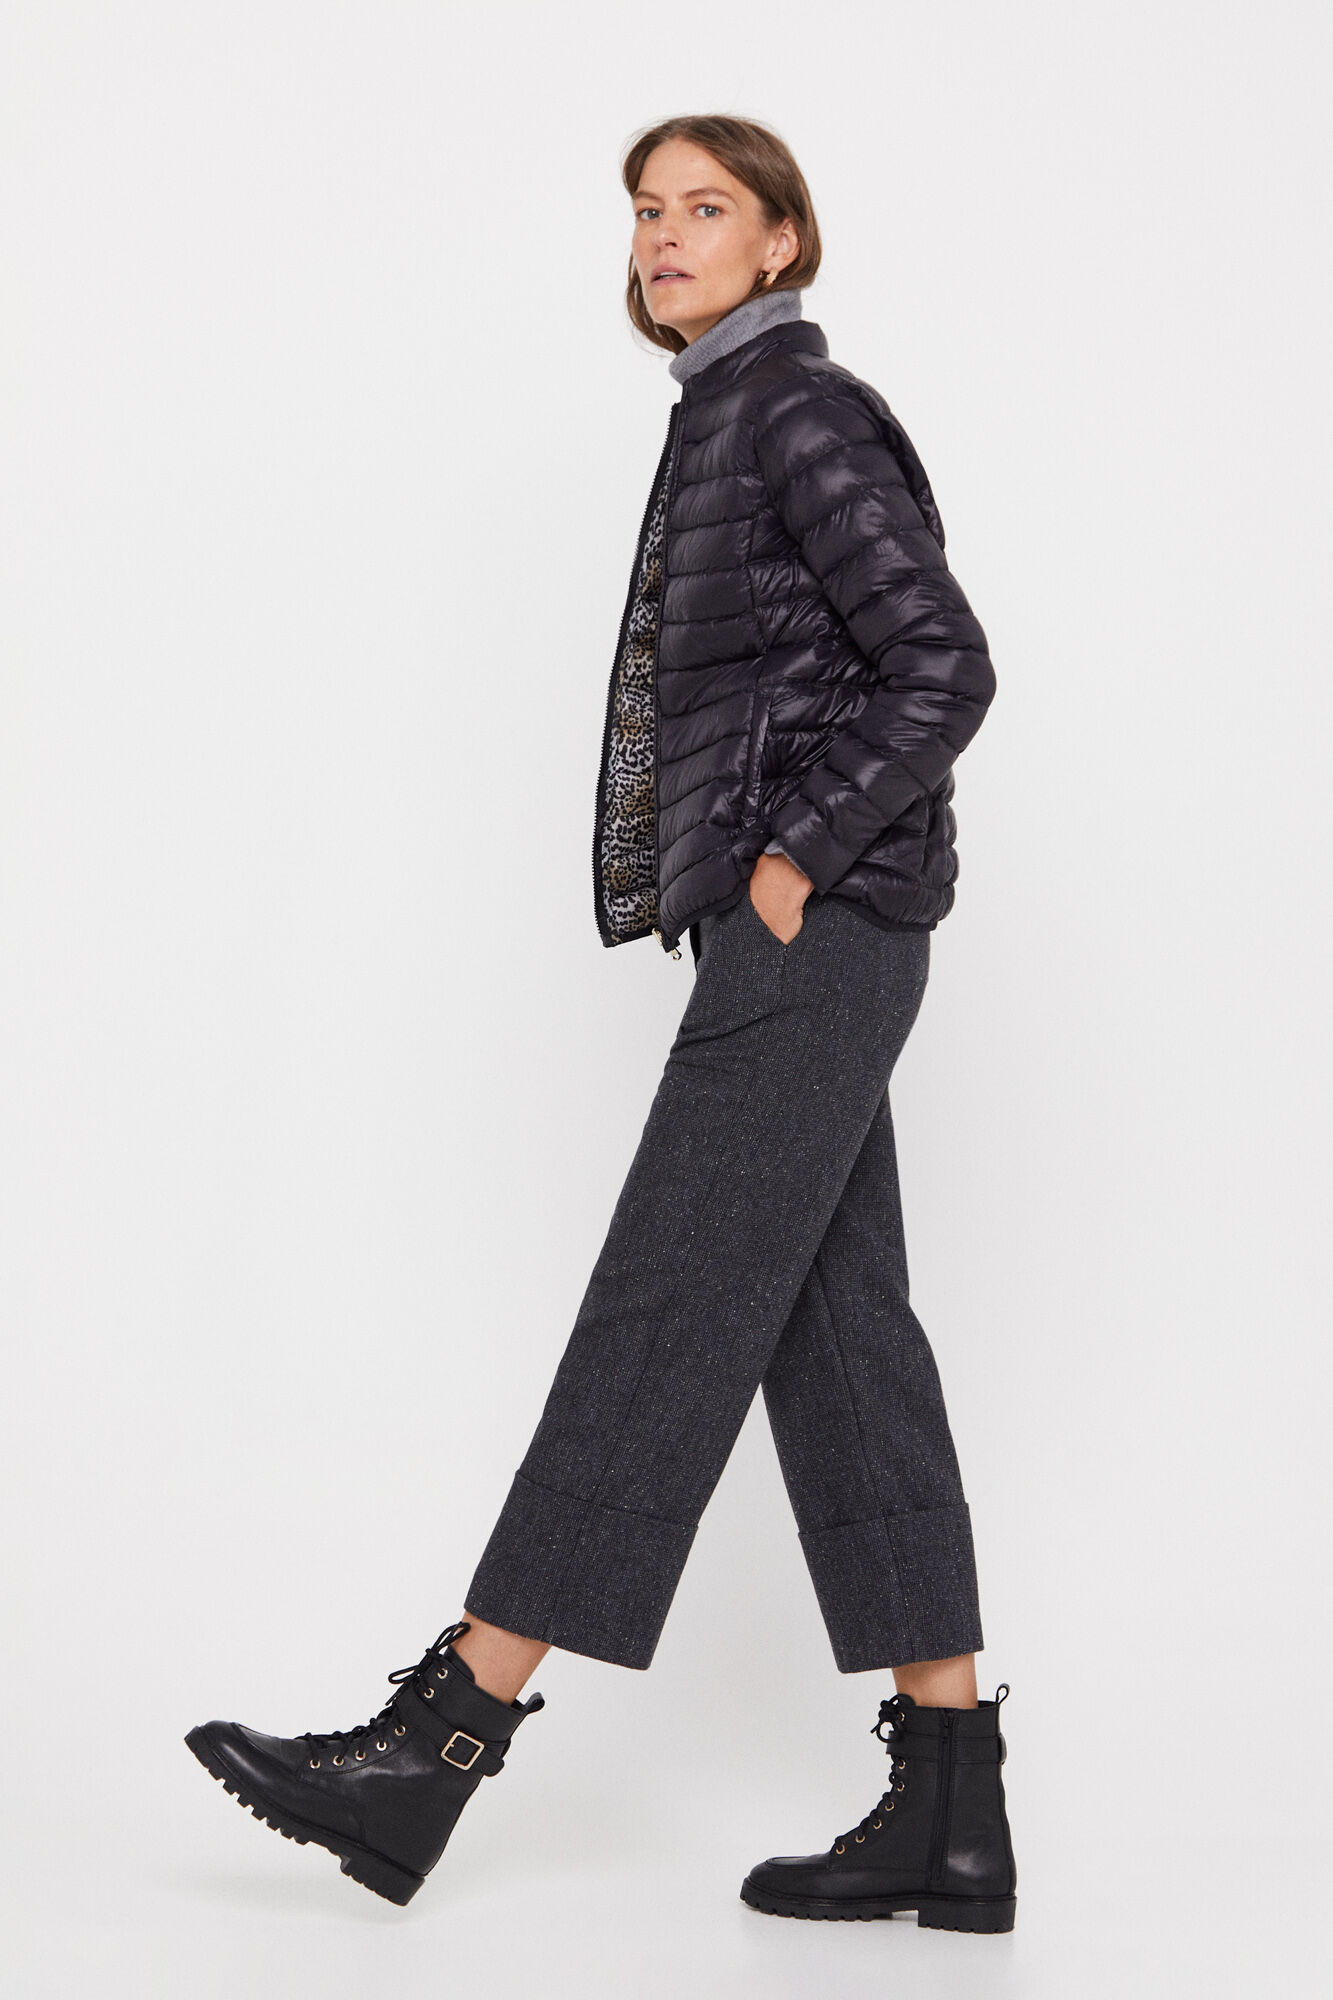 WOMEN FASHION Jackets Light jacket Embroidery Black M discount 52% Zara light jacket 